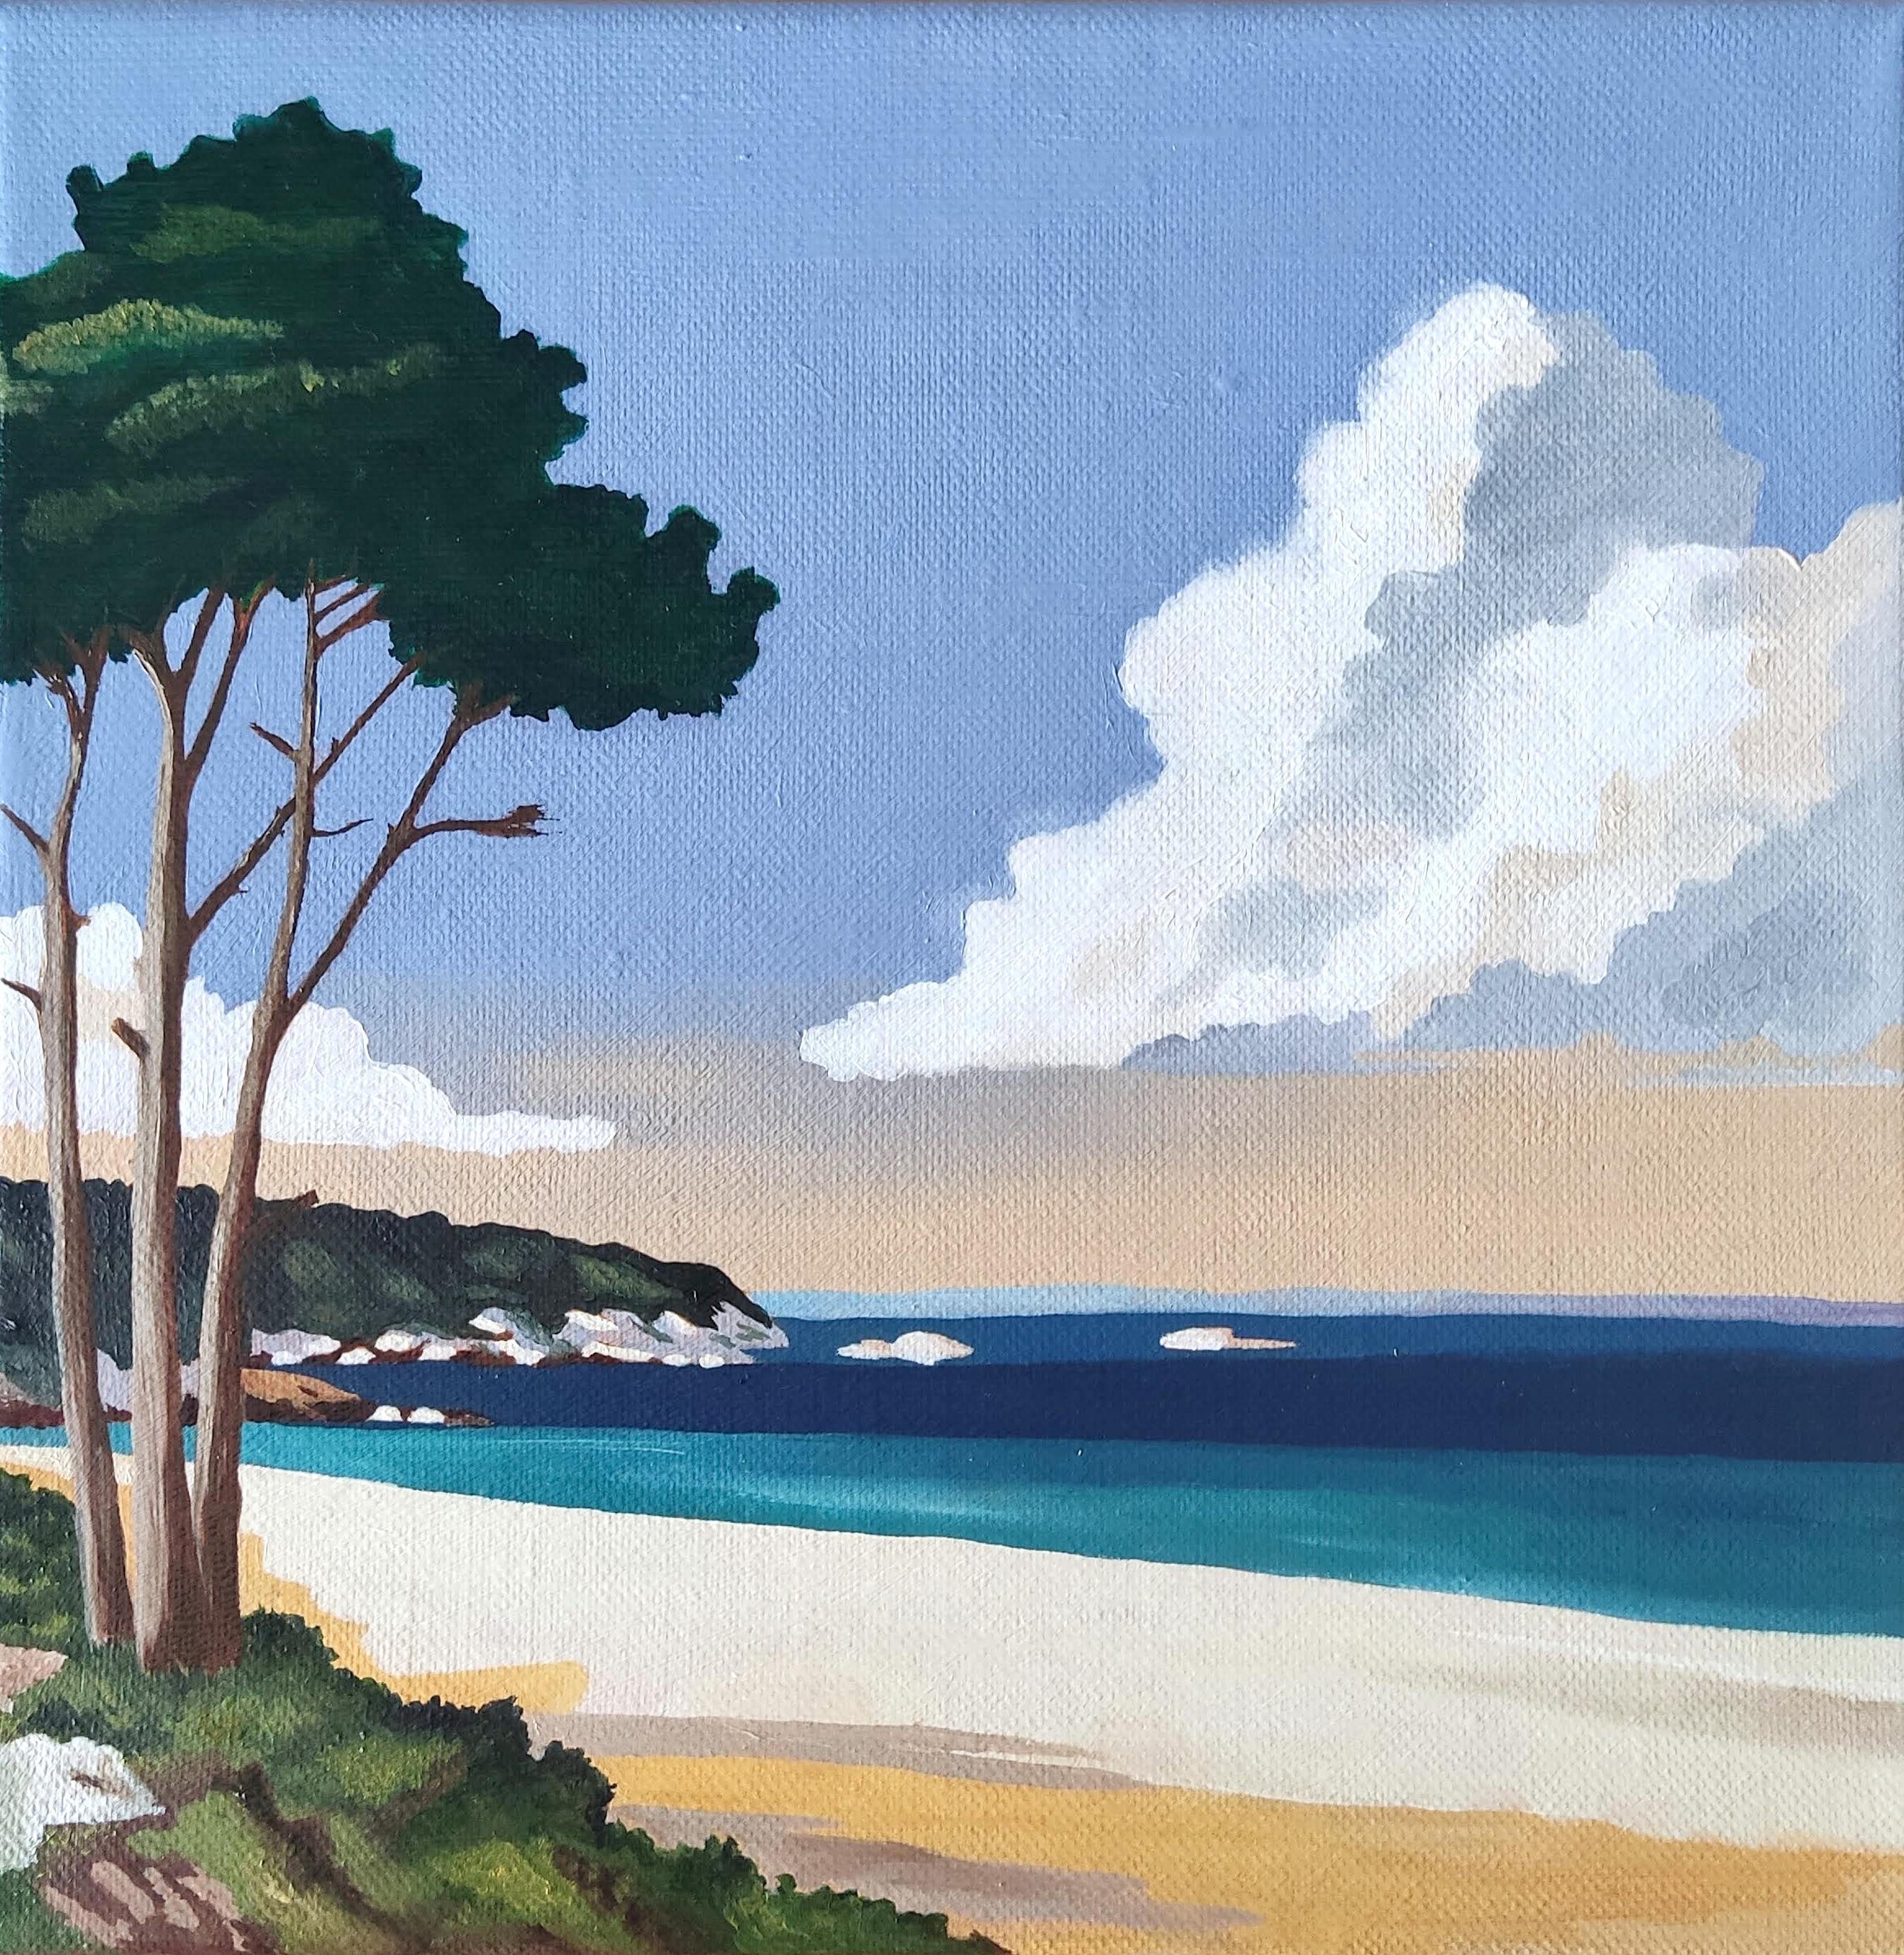 Gabriel Riesnert Landscape Painting - Bord de mer, Oil Painting on Canvas, Seaside, Contemporary Landscape, Beach